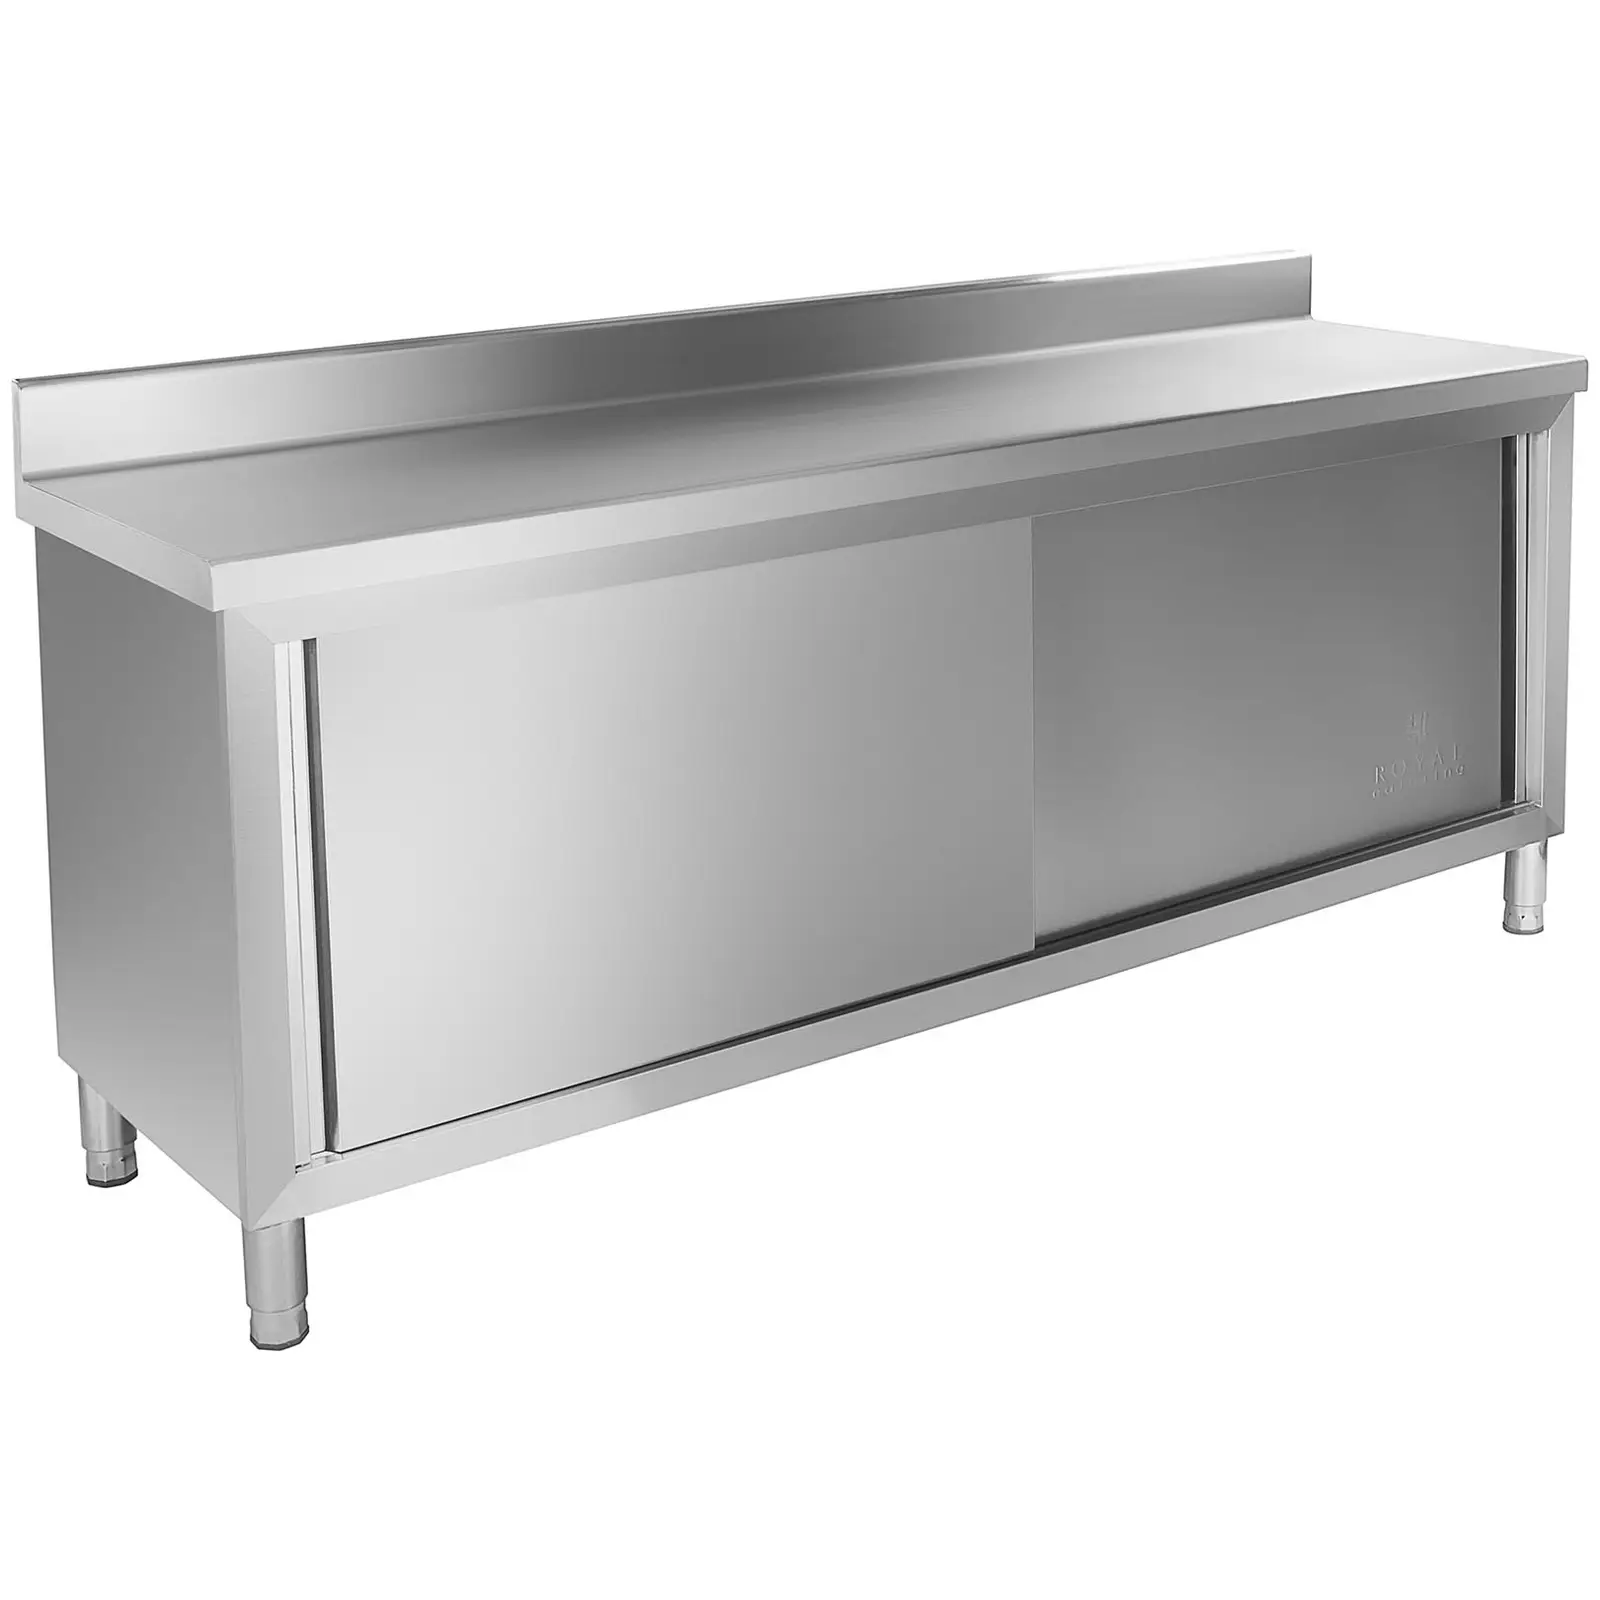 Mueble neutro de acero inoxidable - 200 x 60 cm - antisalpique - 160 kg